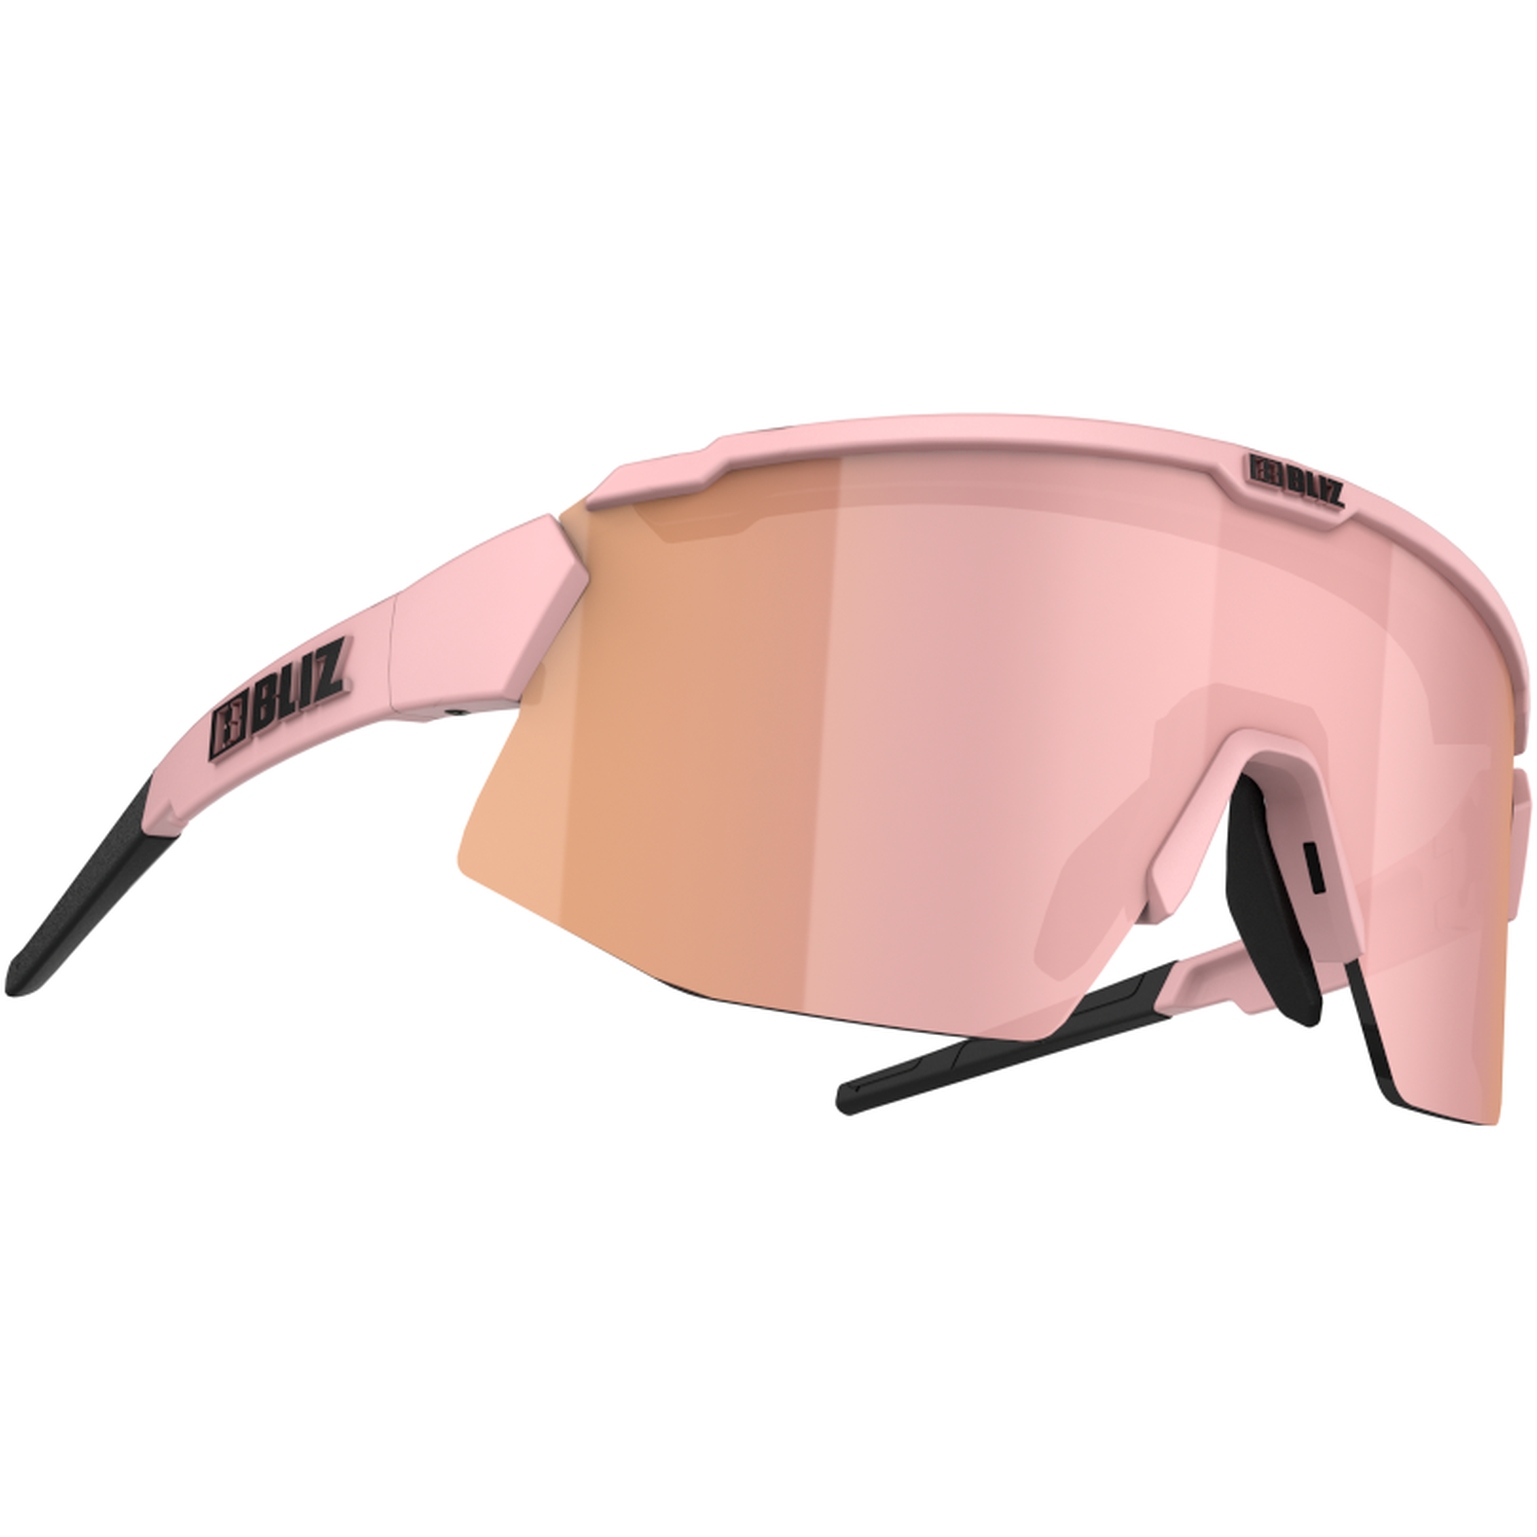 Productfoto van Bliz Breeze Small Bril - Matt Pink / Brown with Rose Multi + Pink